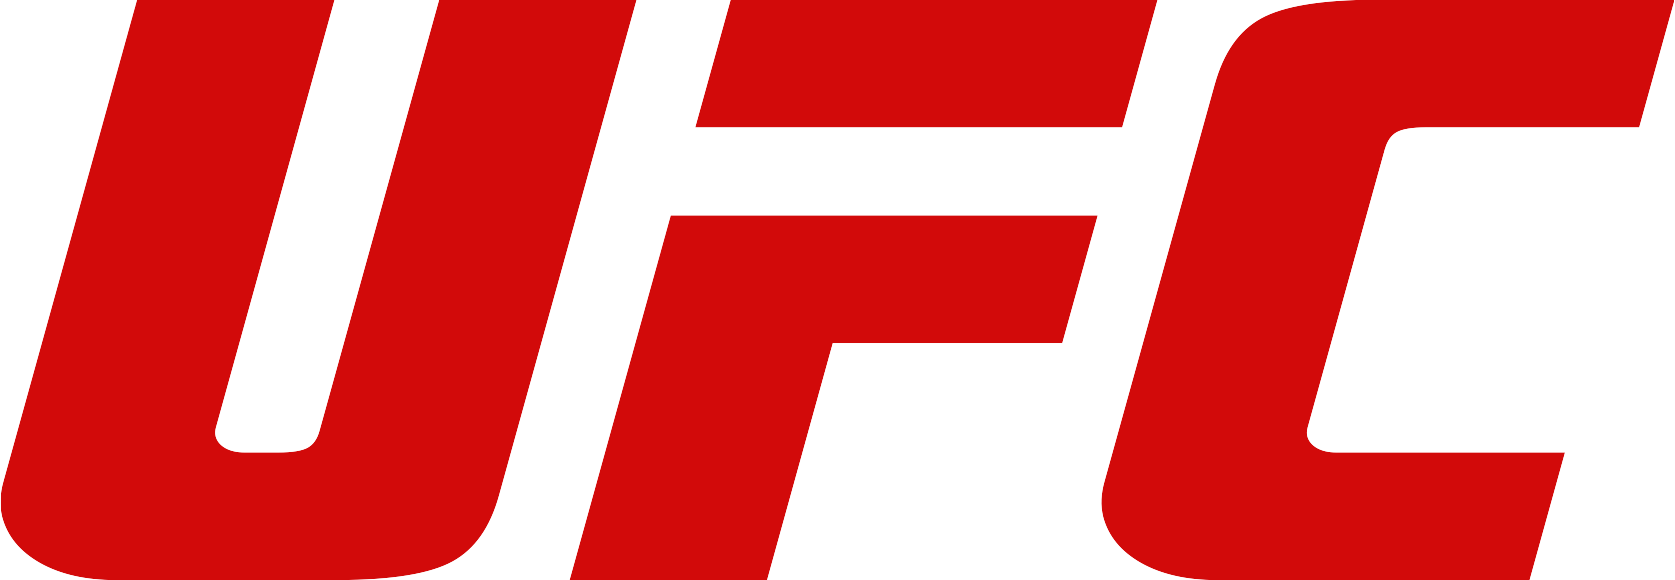 File:Ufc fight night logo by 